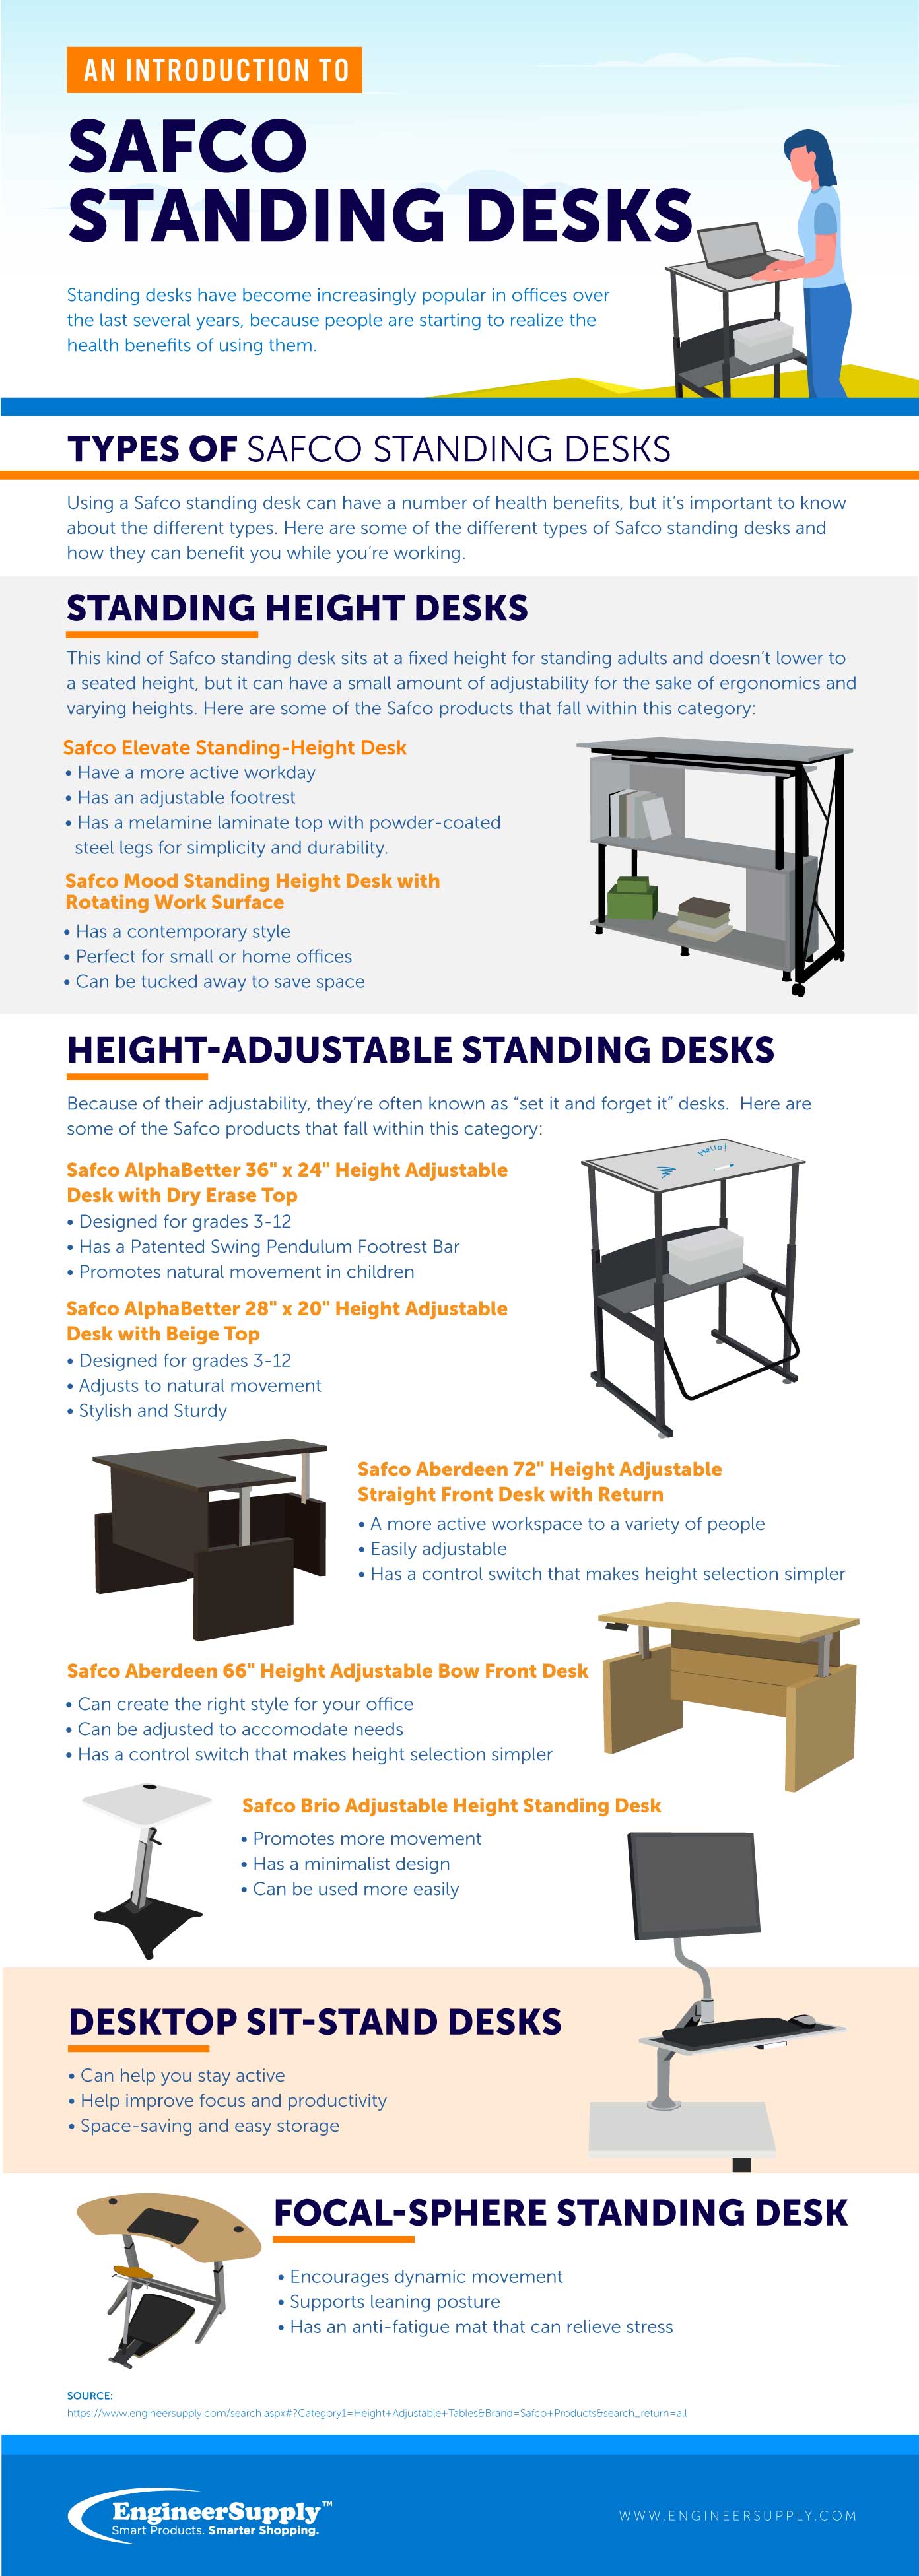 Safco Standing Desks infographic